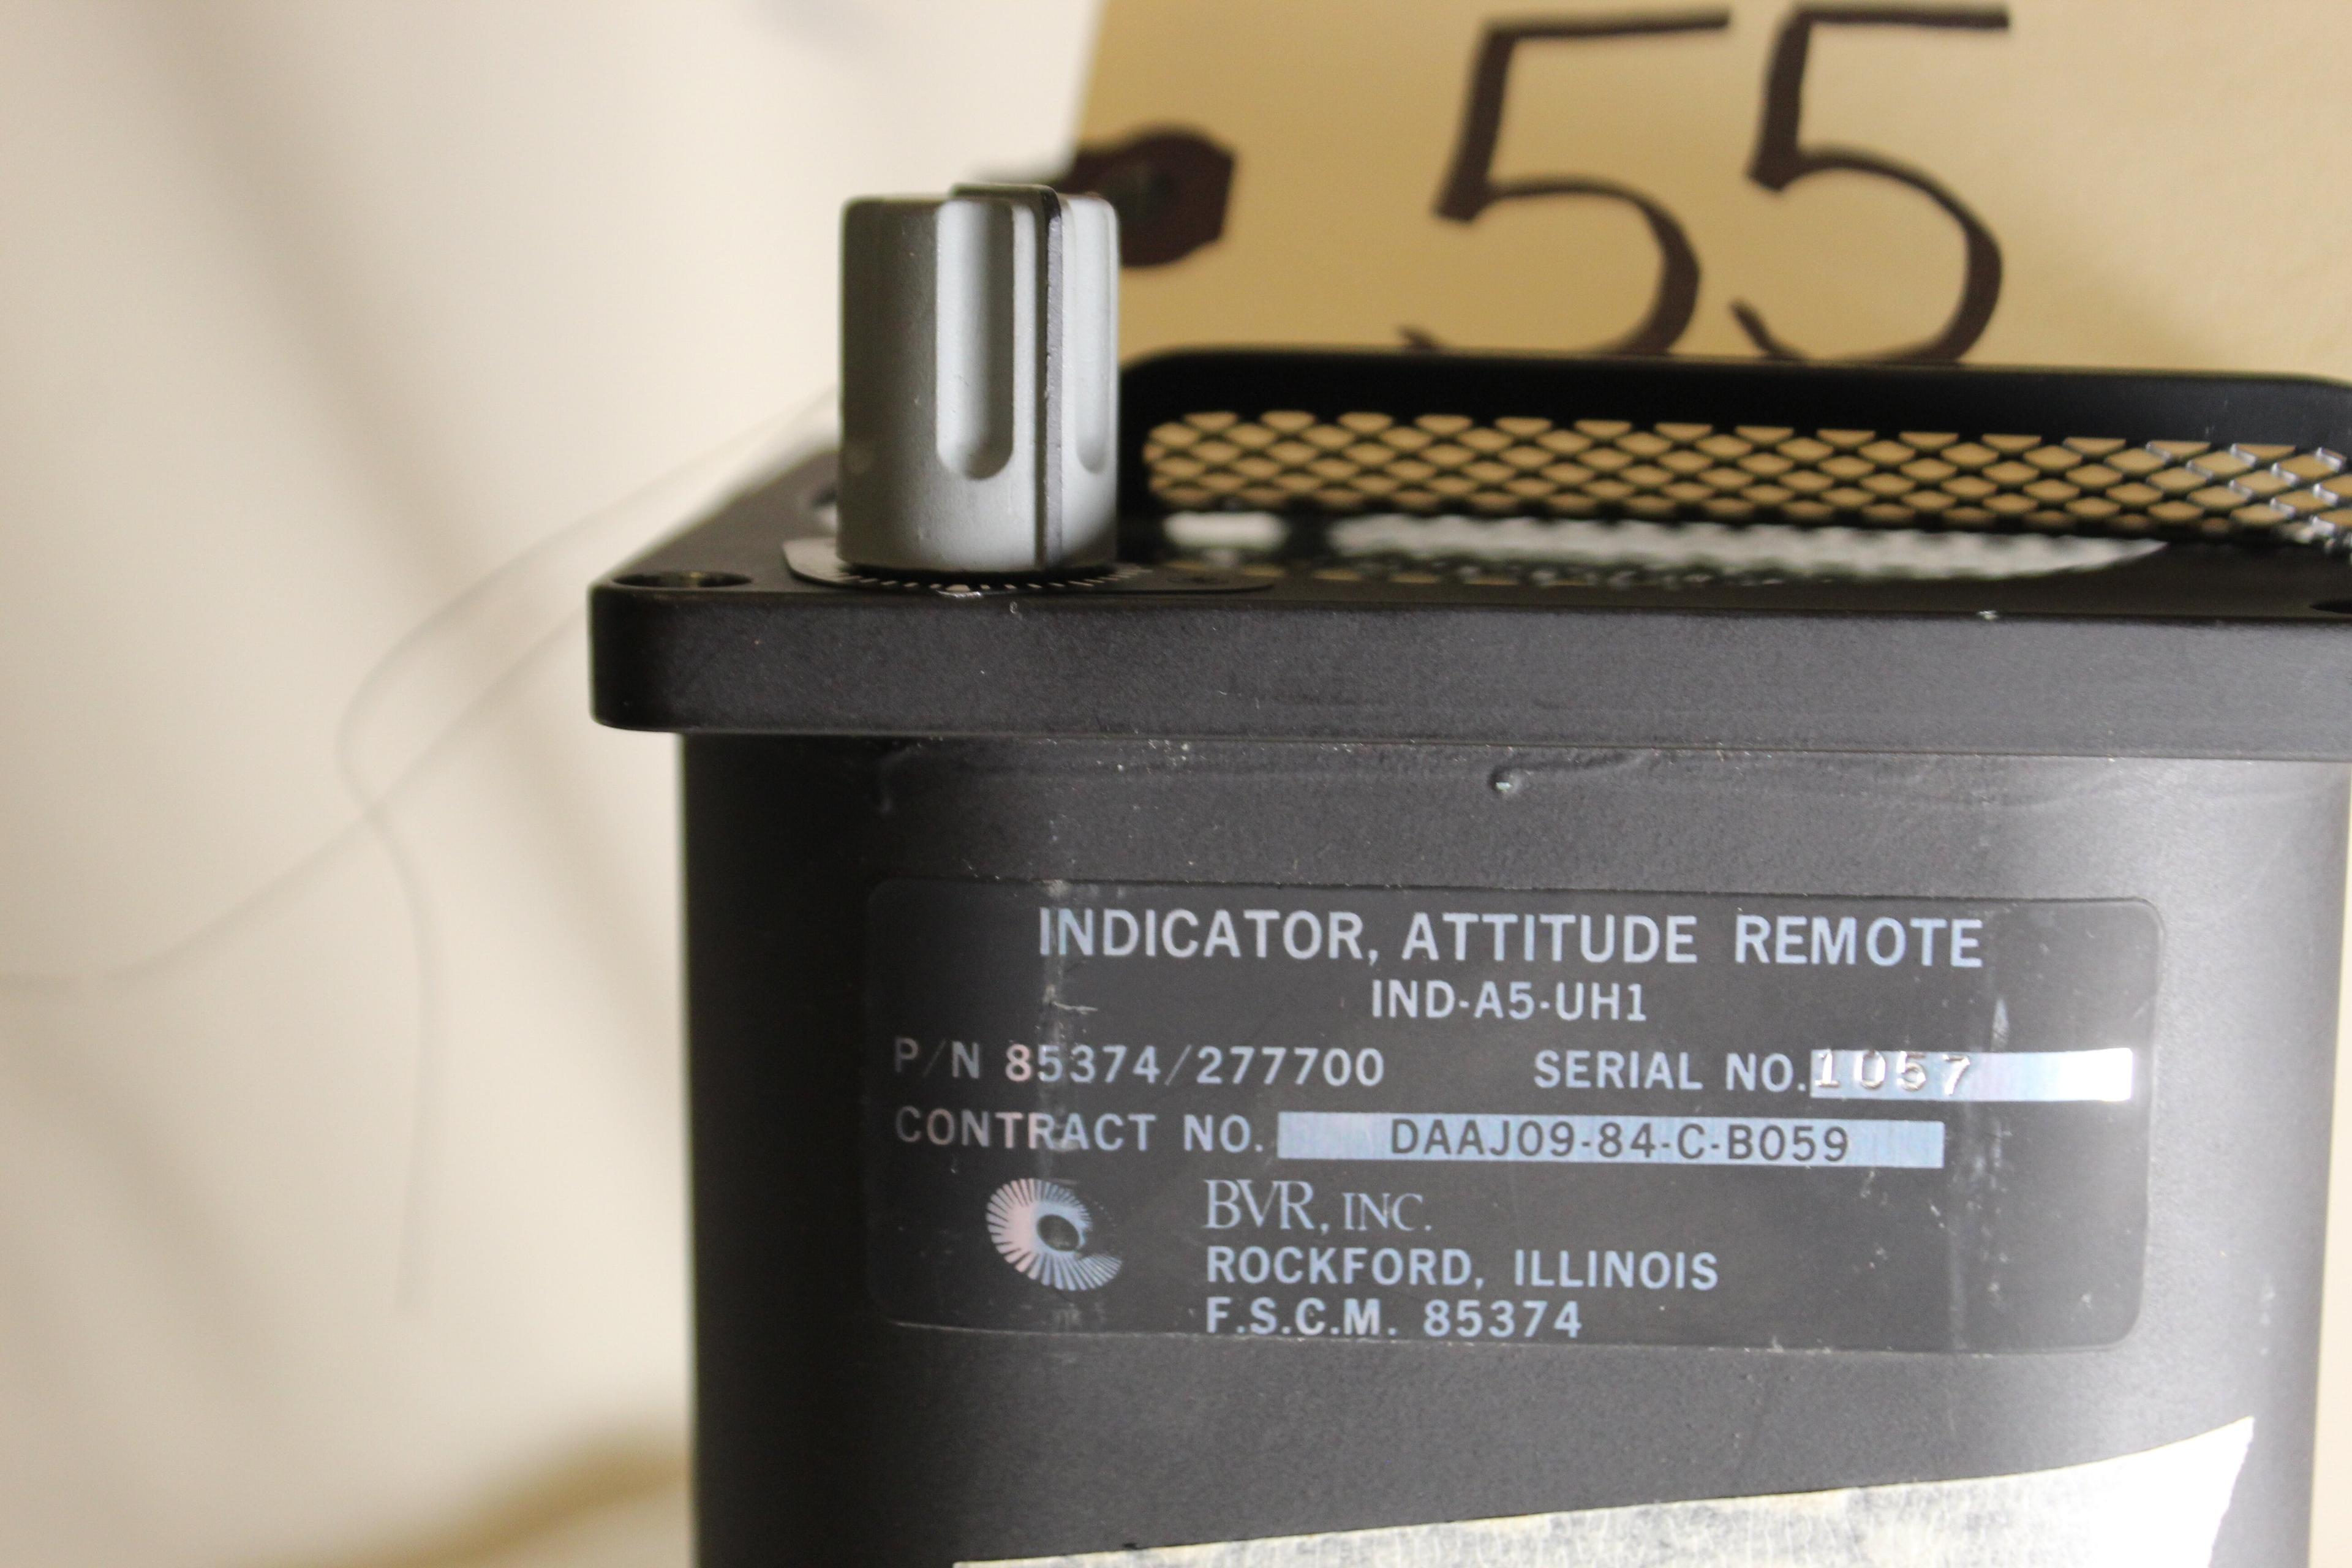 Bvr Remote Attitude Indicator Ind-a5-uh1 Pn 85374/277700